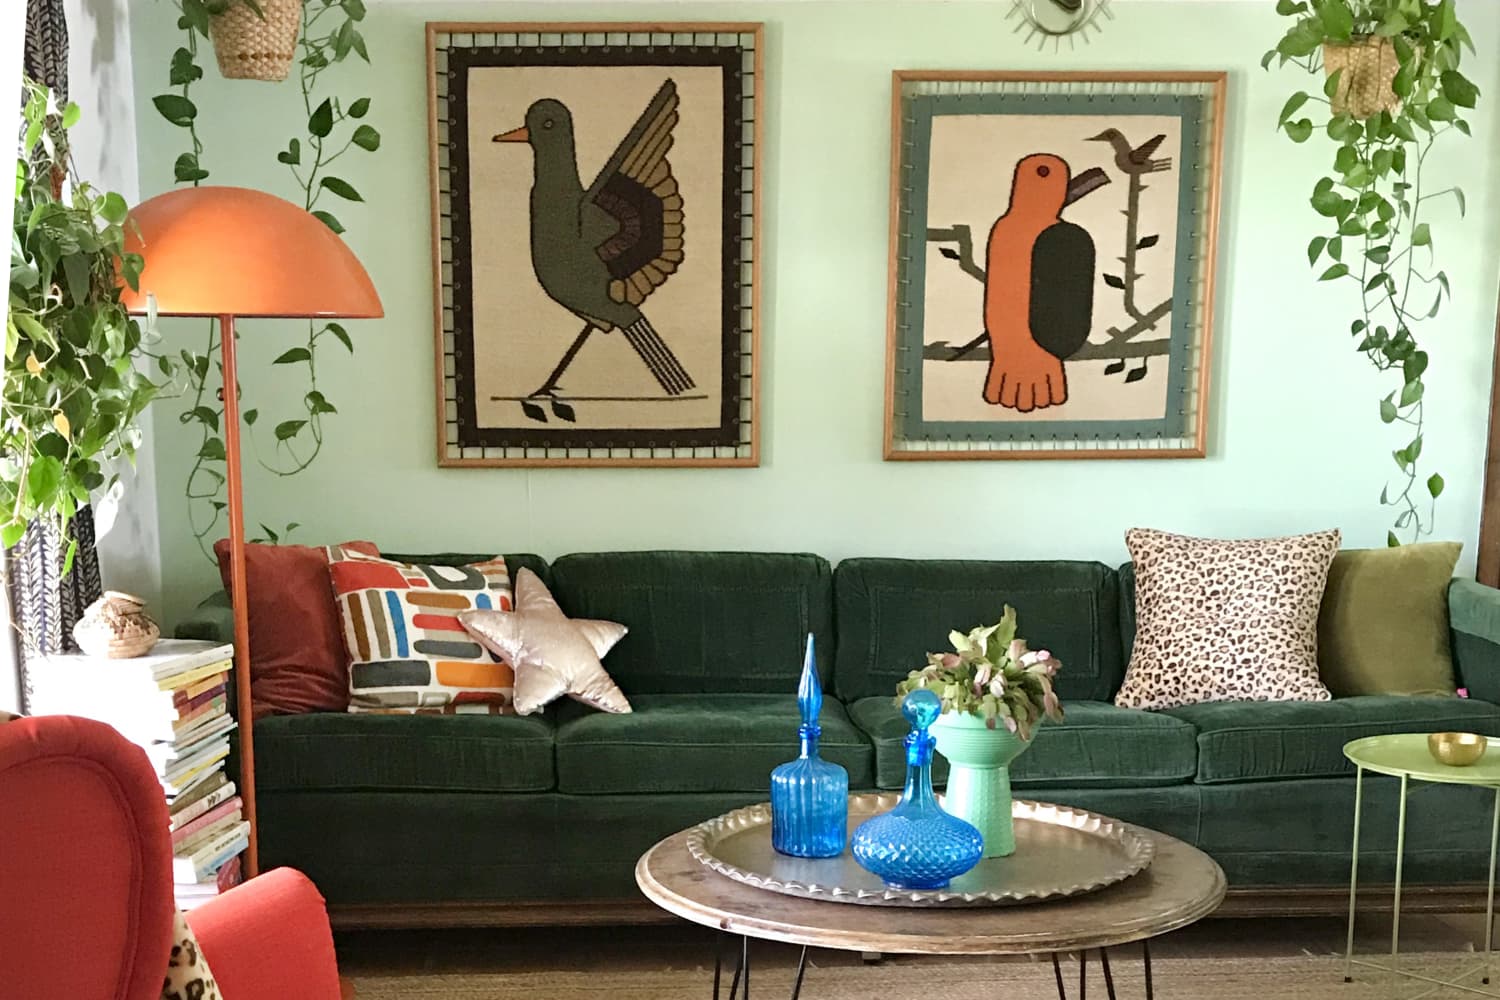 Macrame decor ideas for a modern home - Gathered